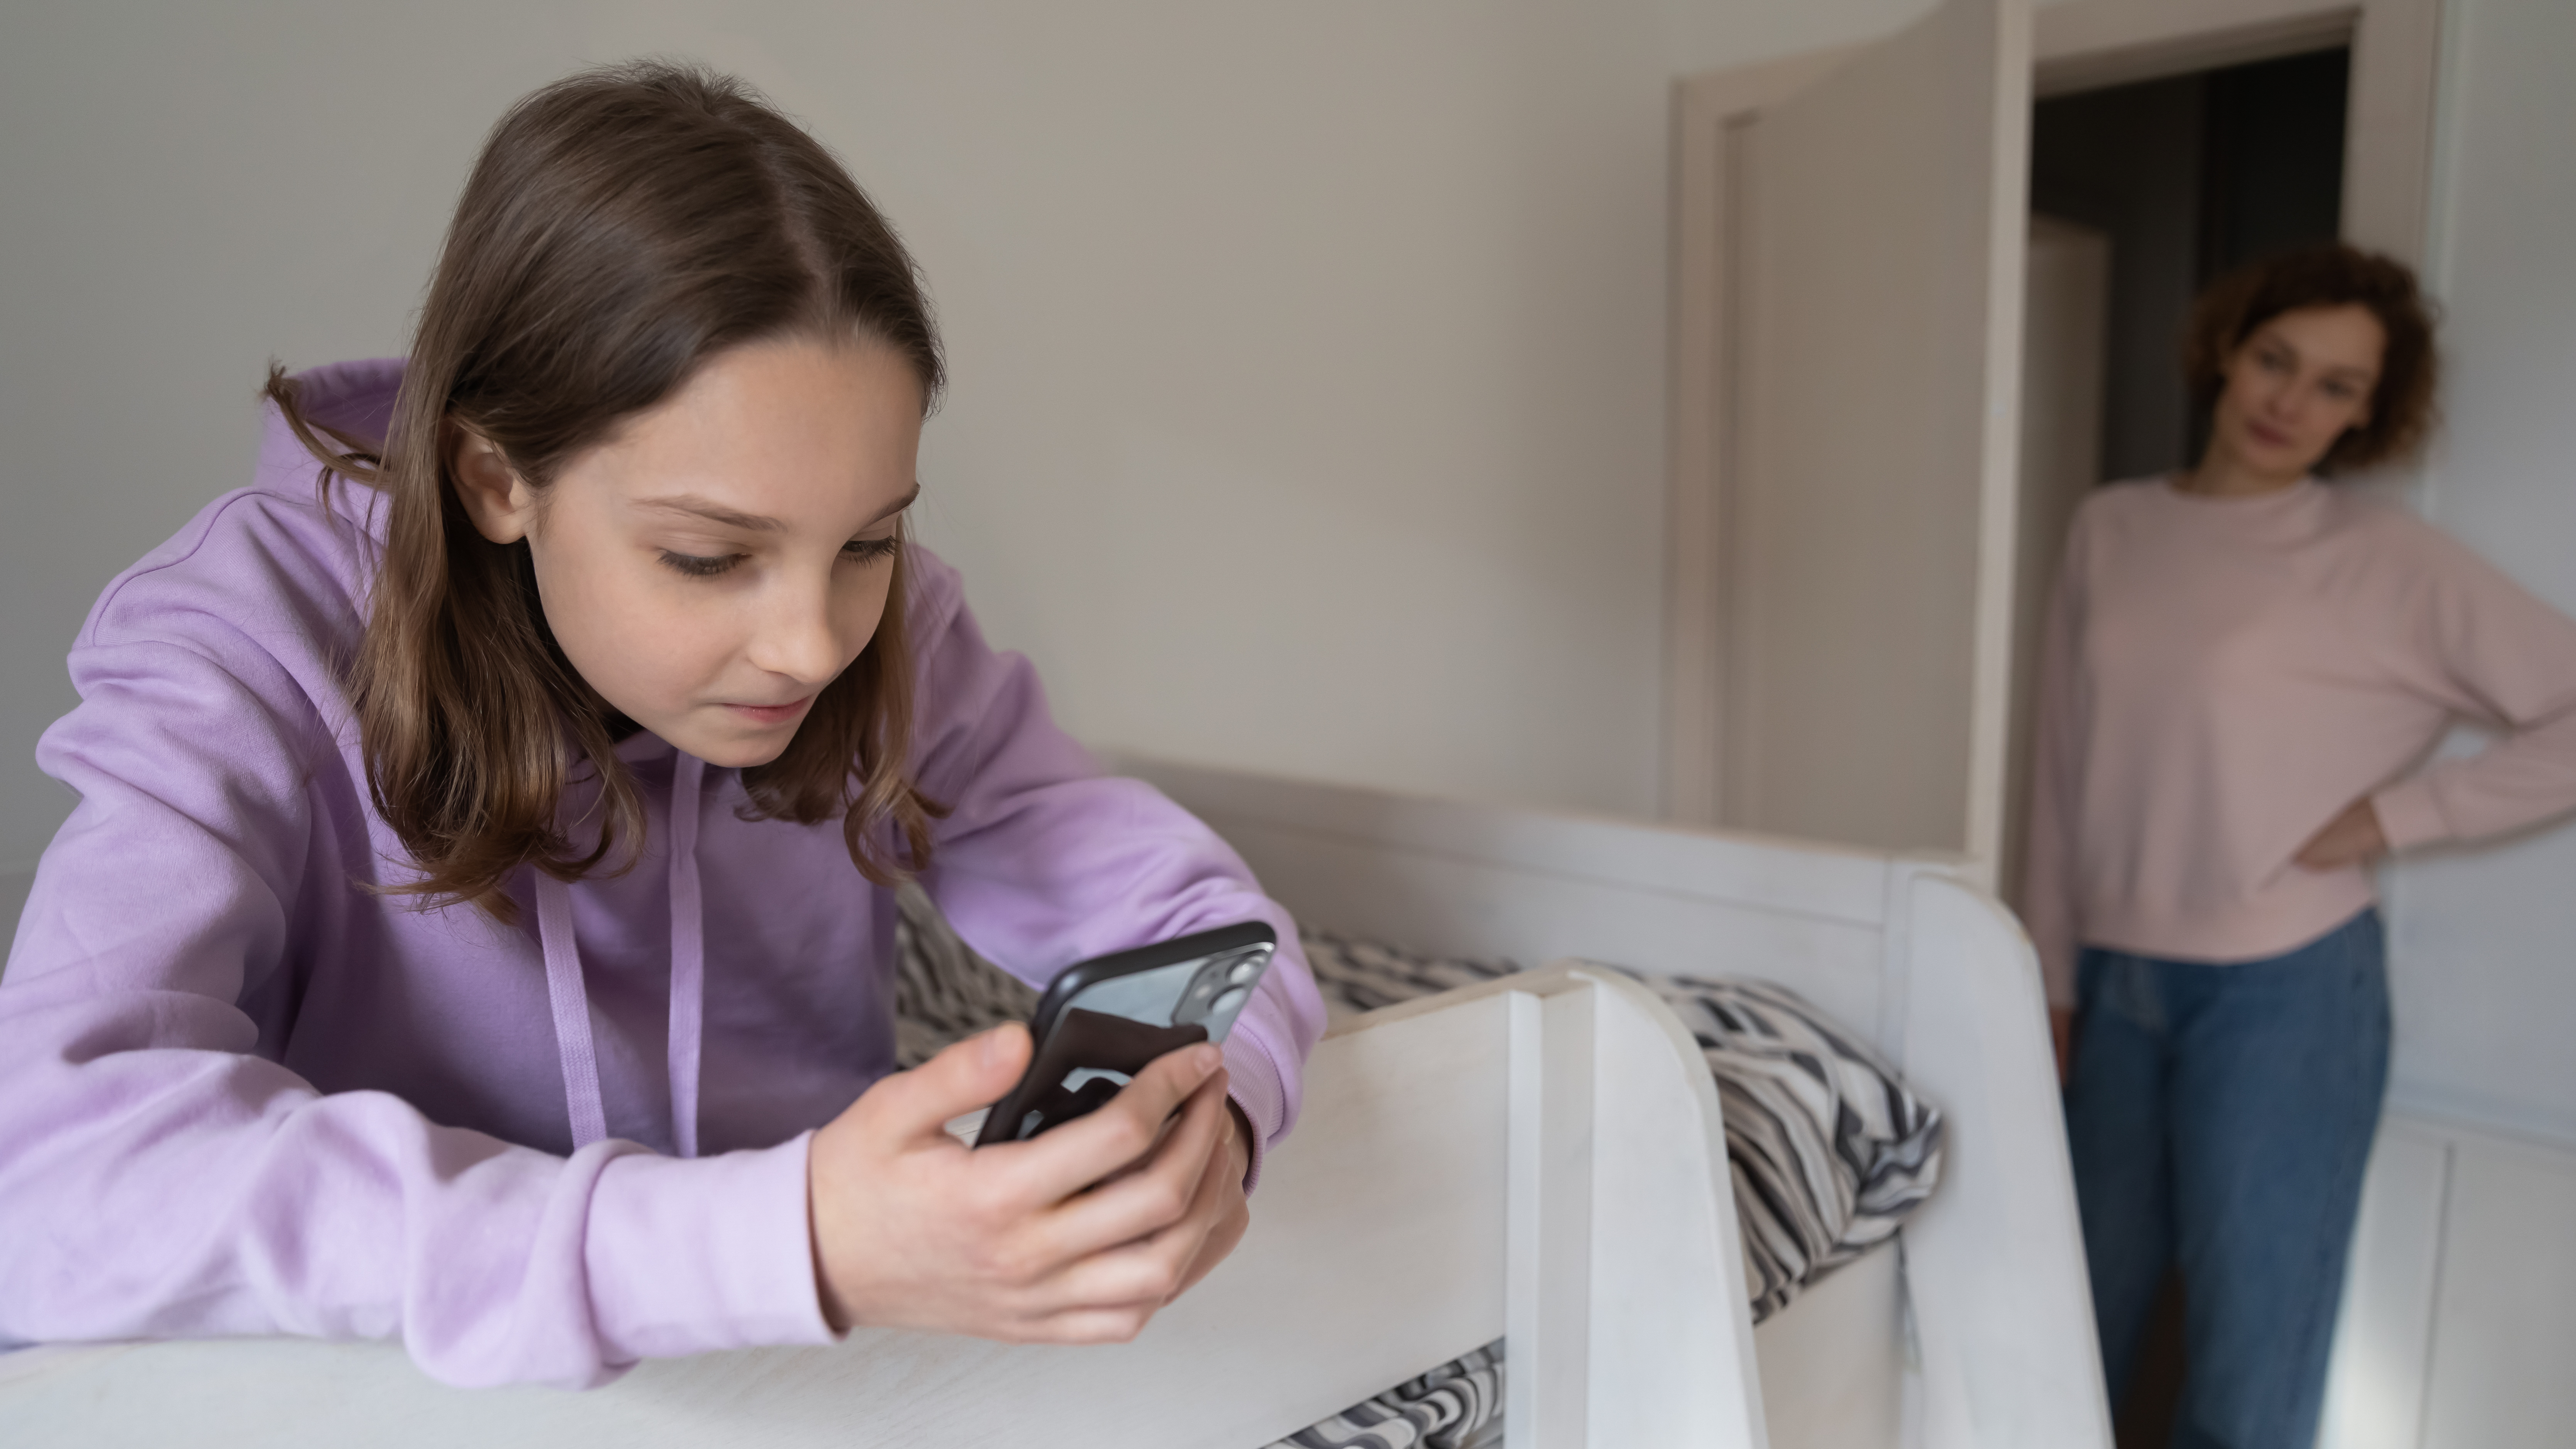 Una chica utilizando un teléfono mientras una mujer la observa | Fuente: Shutterstock